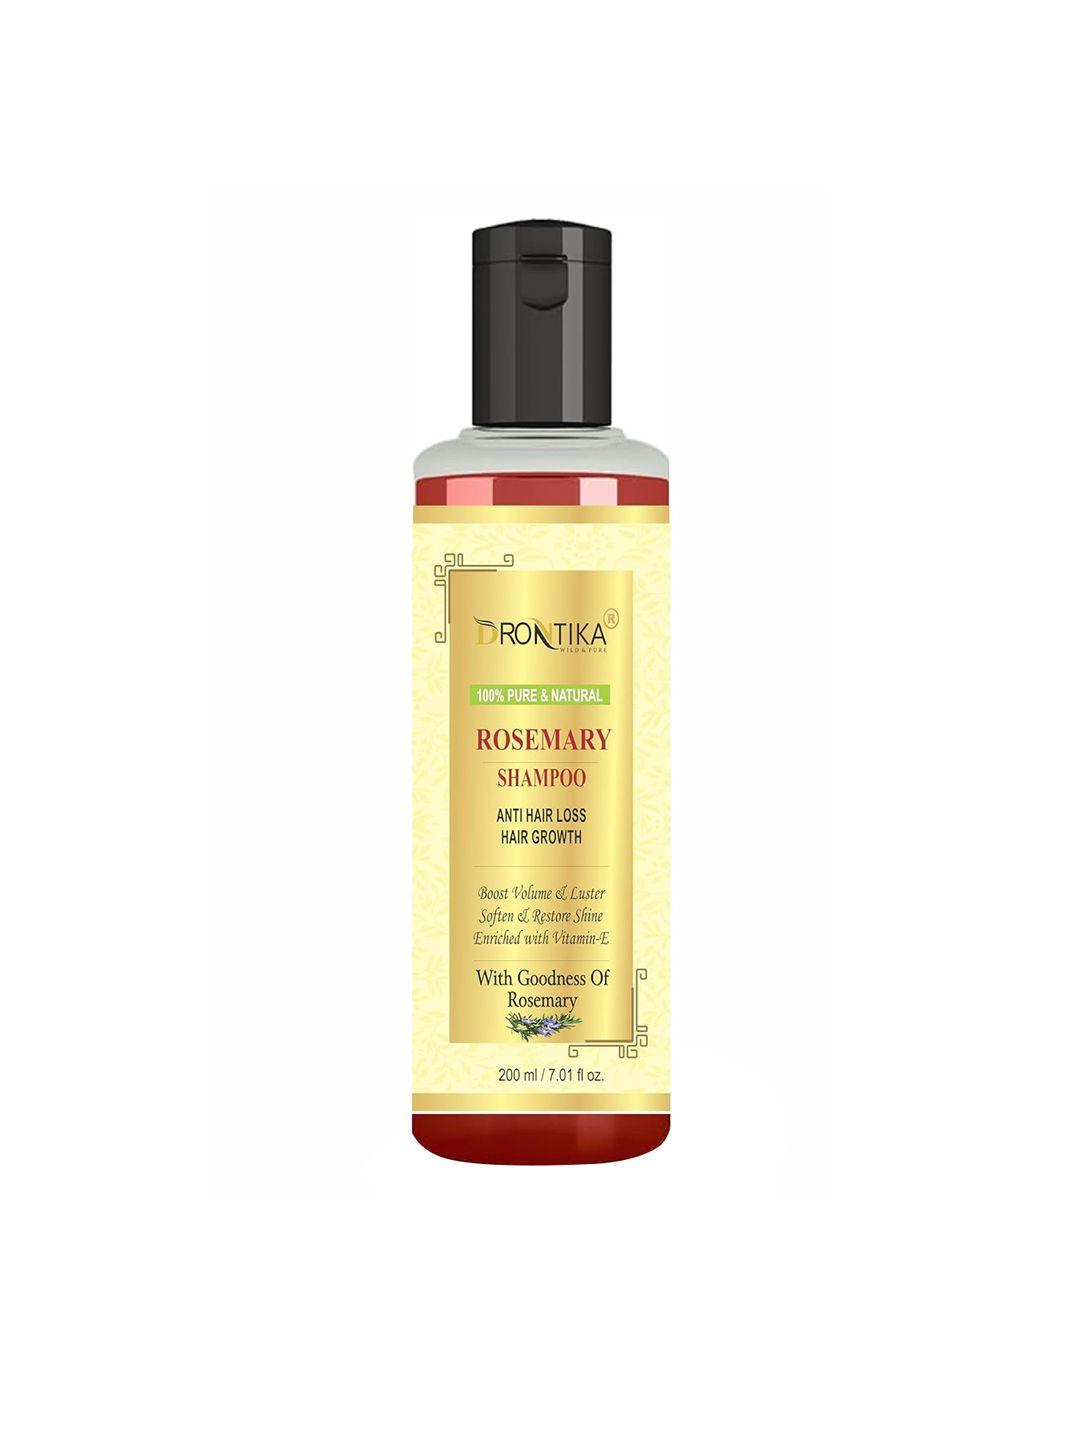 drontika pure & natural rosemary shampoo for anti hair loss & hair growth - 200ml